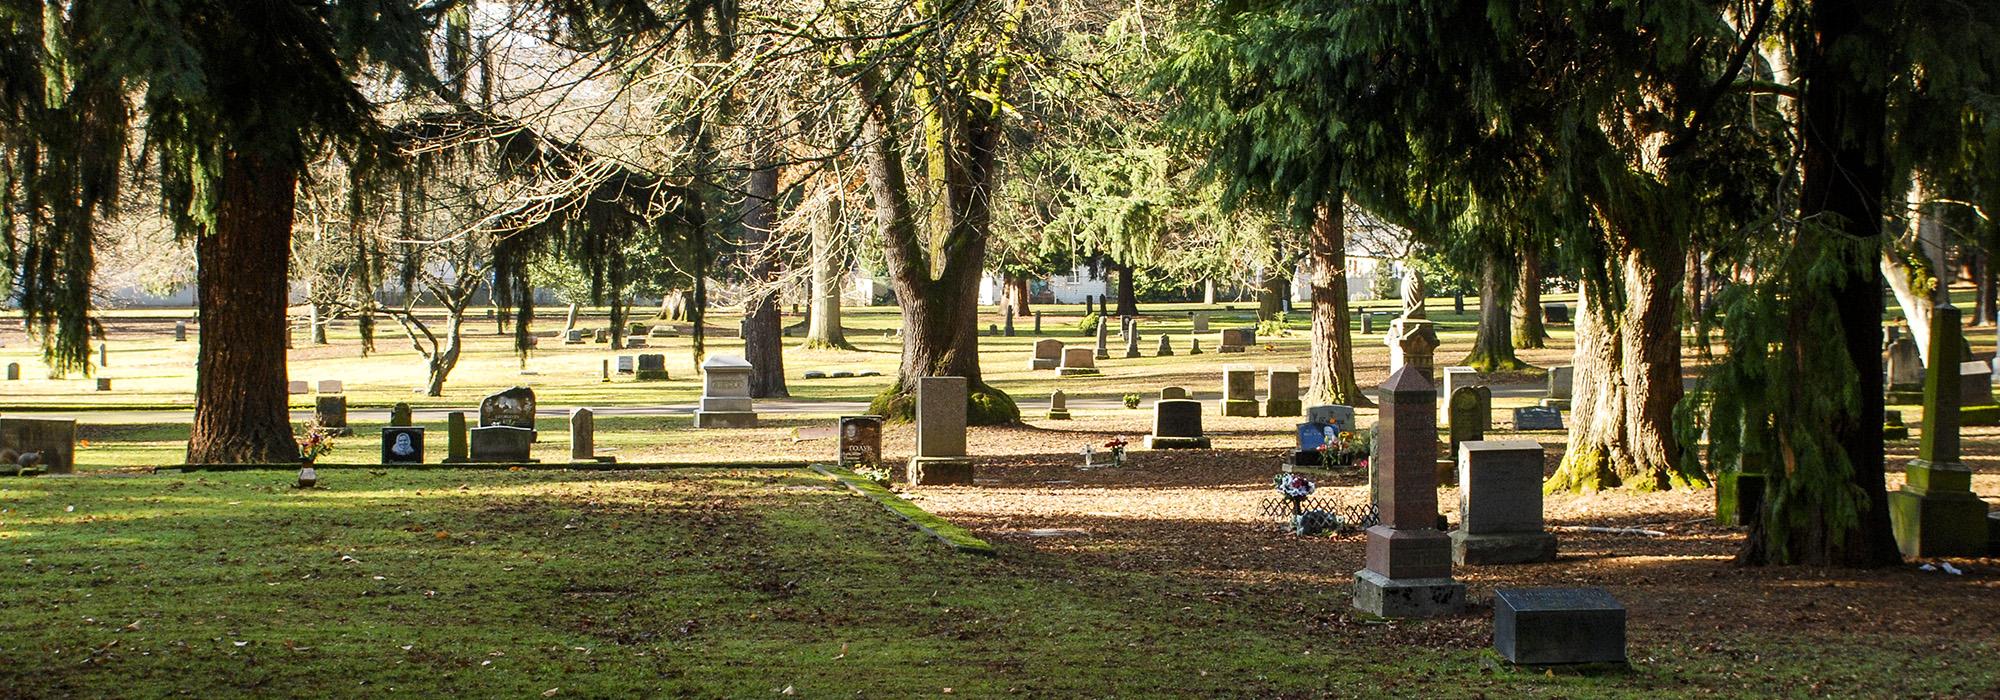 Lone Fir Cemetery, Portland, OR